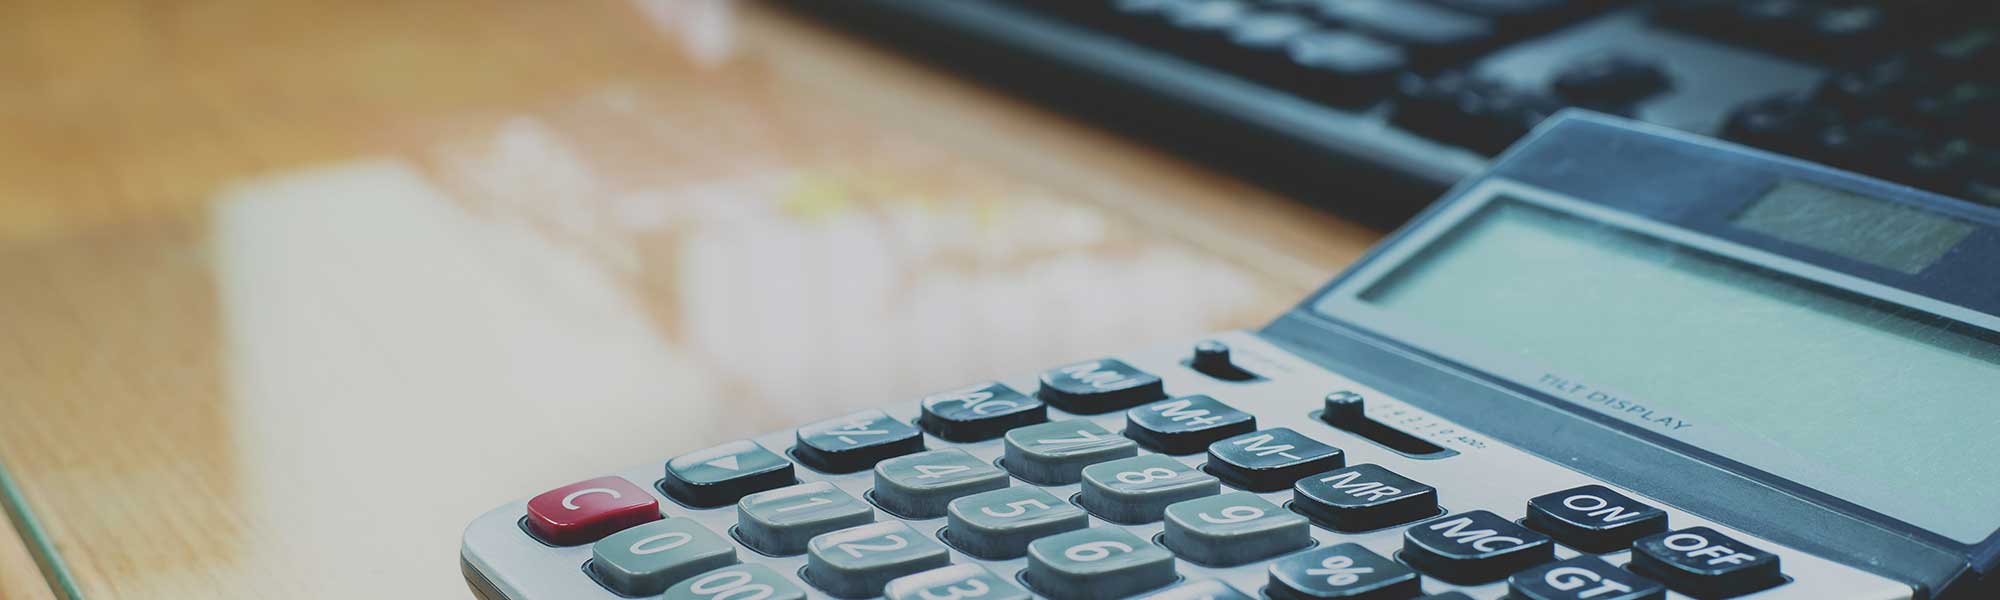 Calculator and keyboard on desk